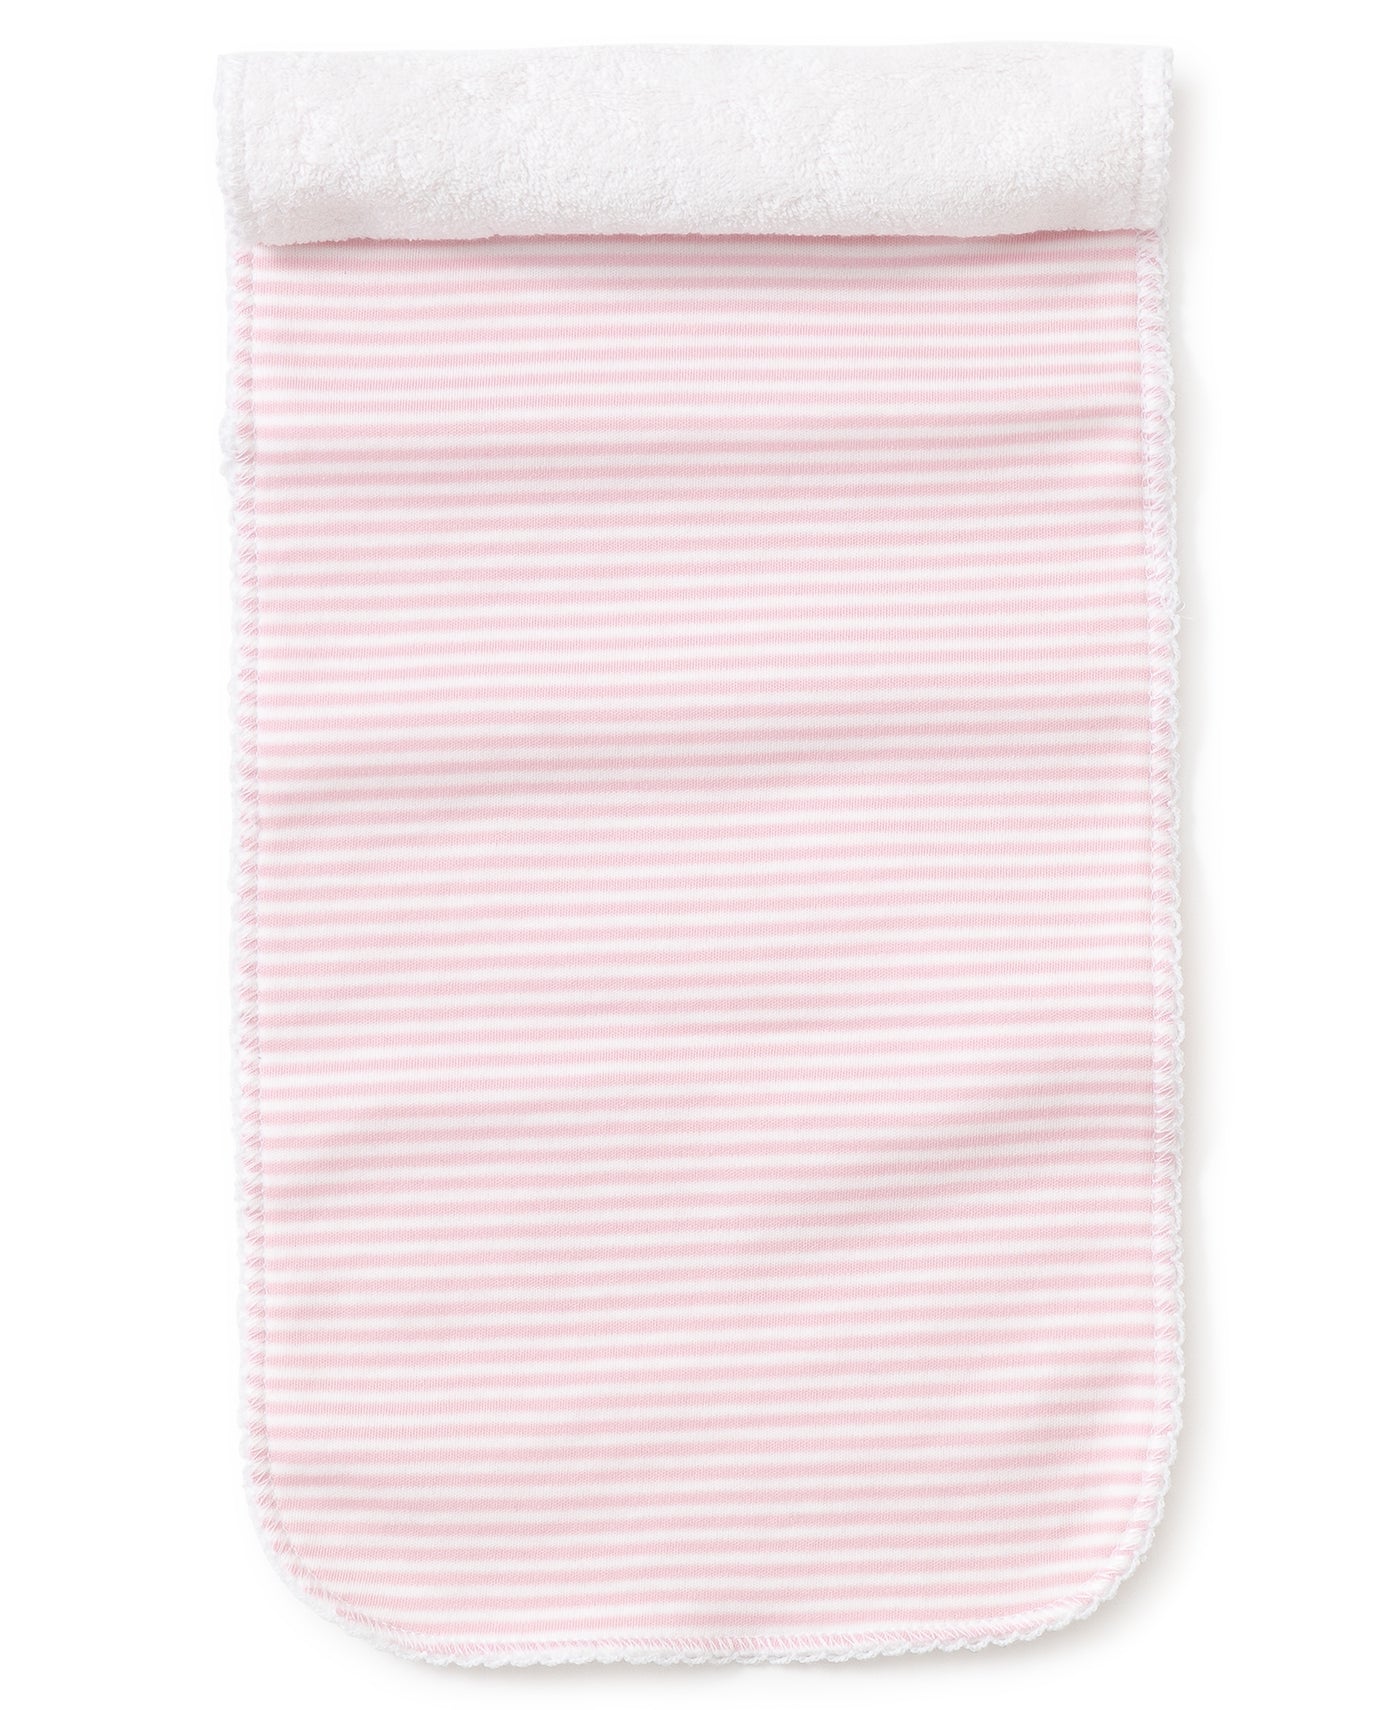 Five Piece Set - Pink Stripes